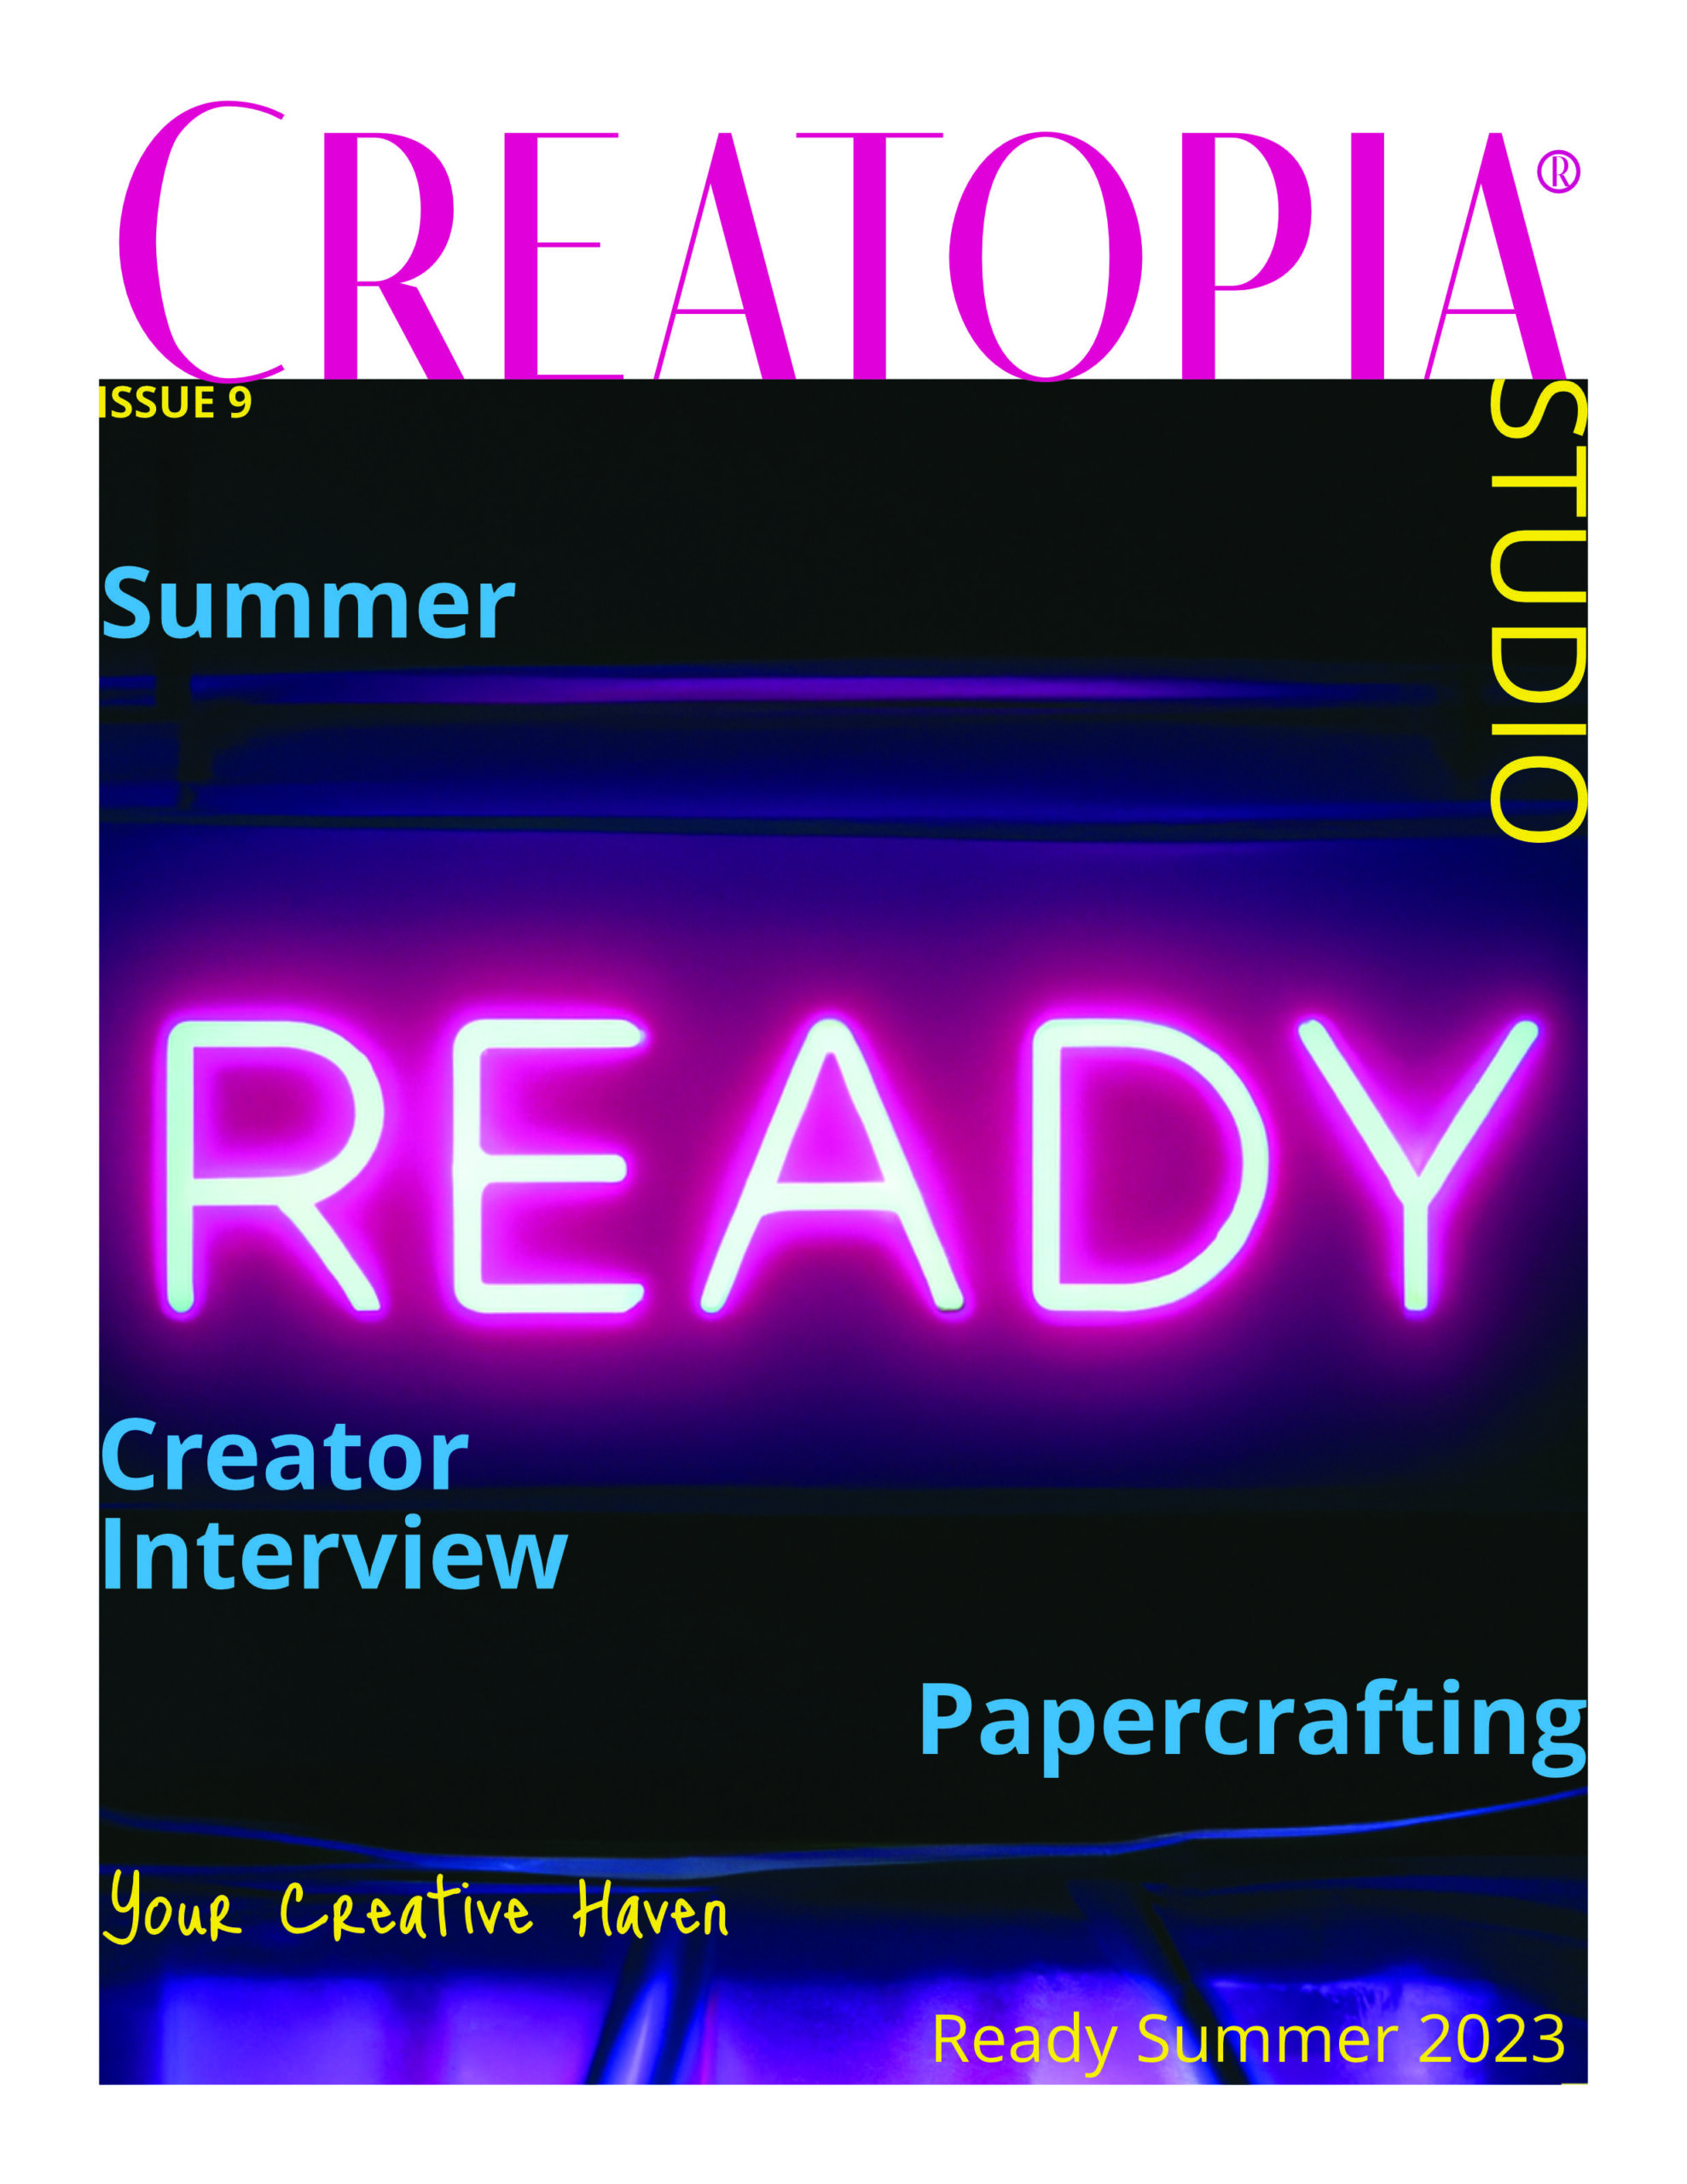 Cover of Creatopia Magazine Issue 9 Summer 2023 